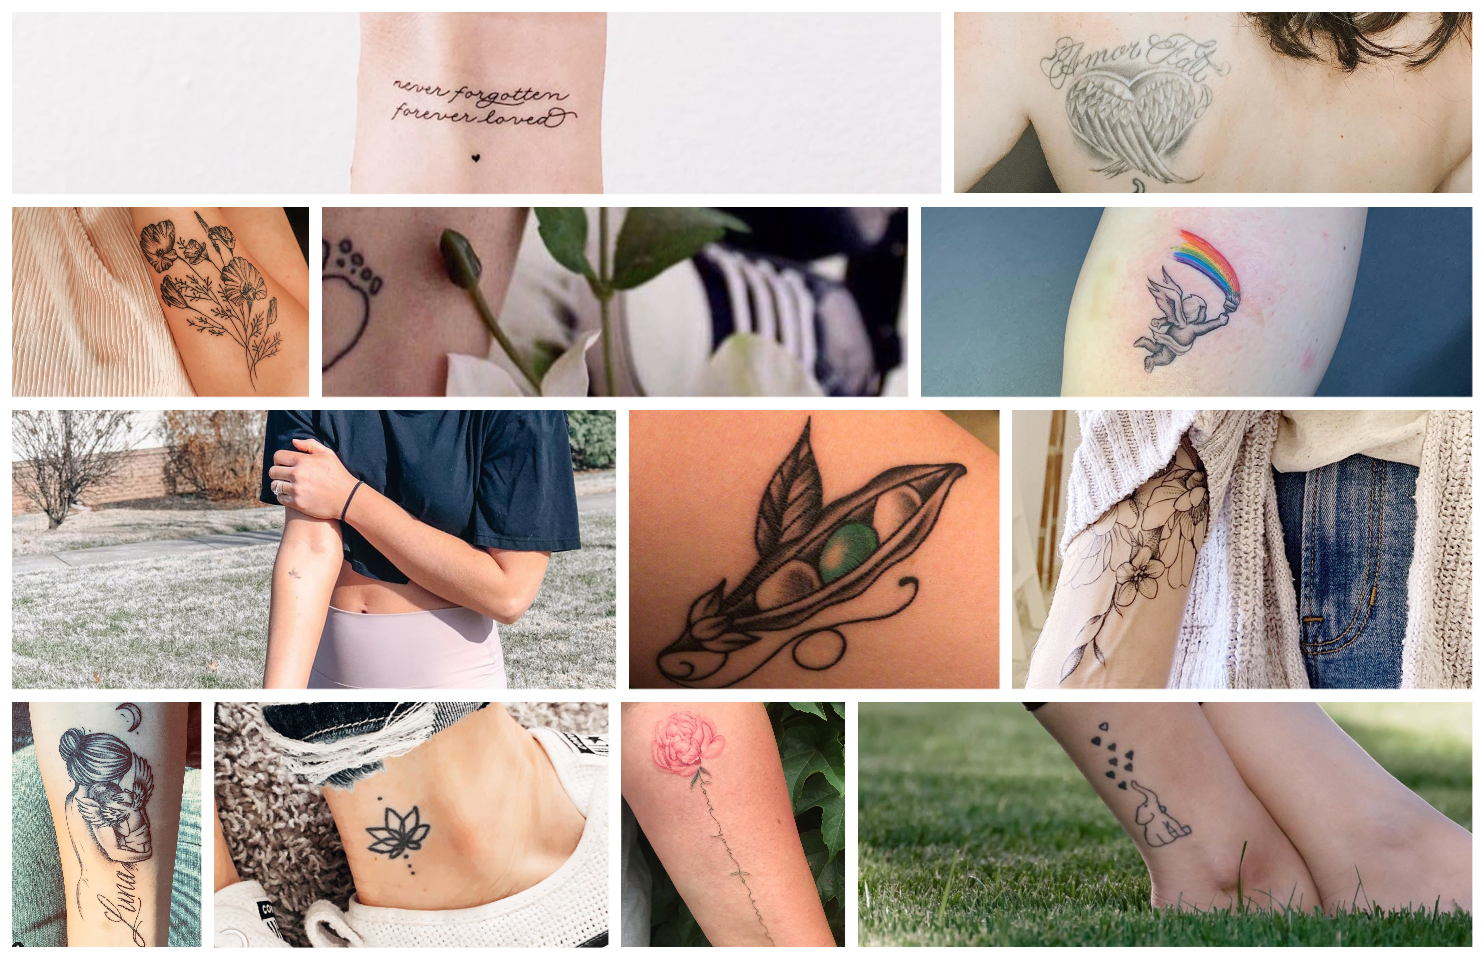 Justin Bieber Shows Fans Tattoos on Instagram Pics